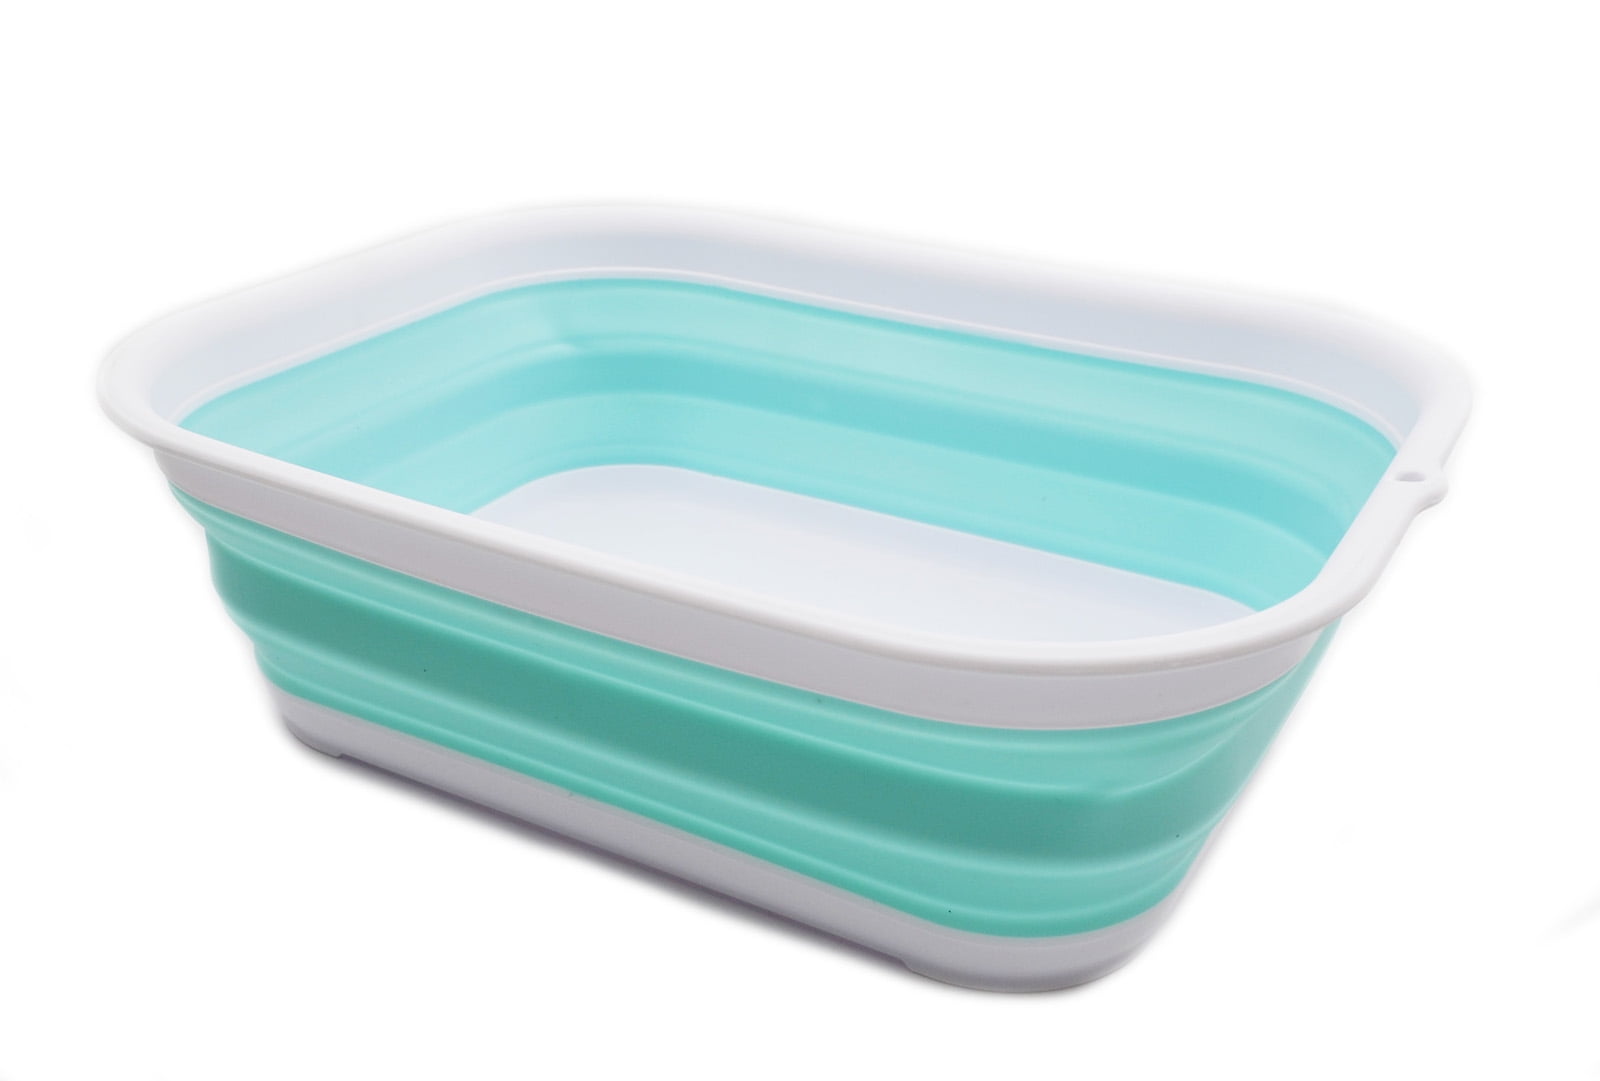 Space Saving Plastic Washtub Foldable Dish Tub Collapsible Tub 2, White/Lake Green 3.17 Gallon Portable Washing Basin SAMMART 12L 